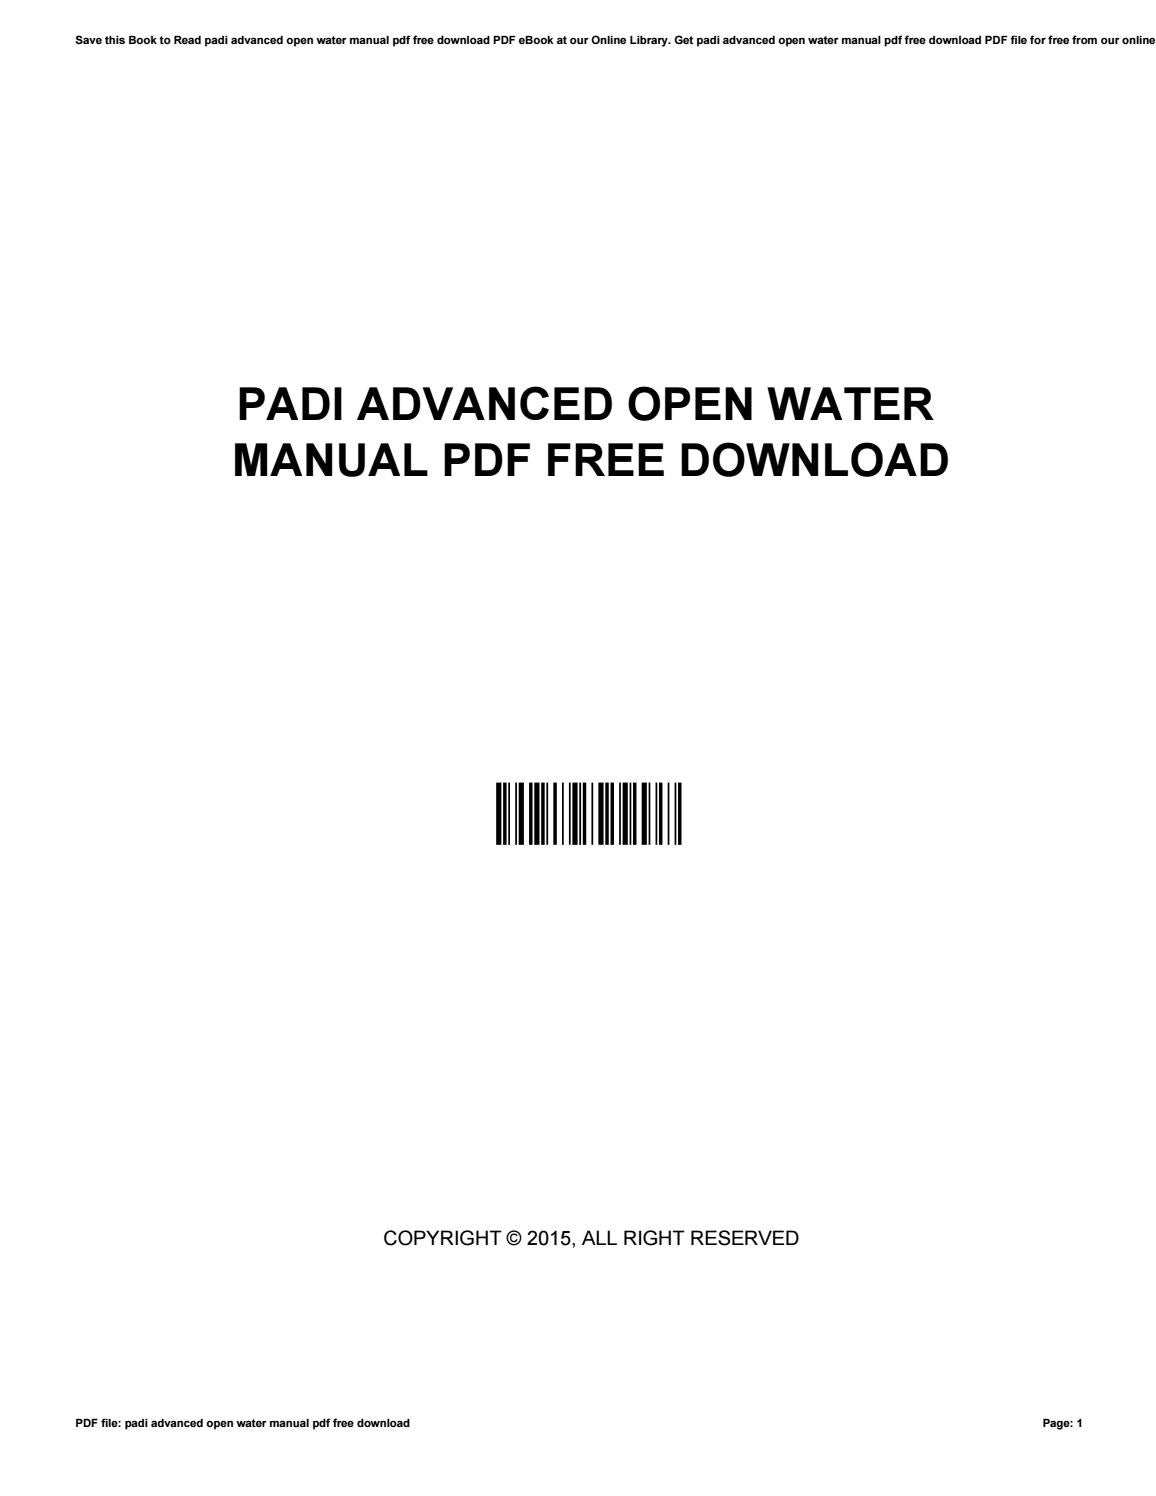 padi open water manual pdf french